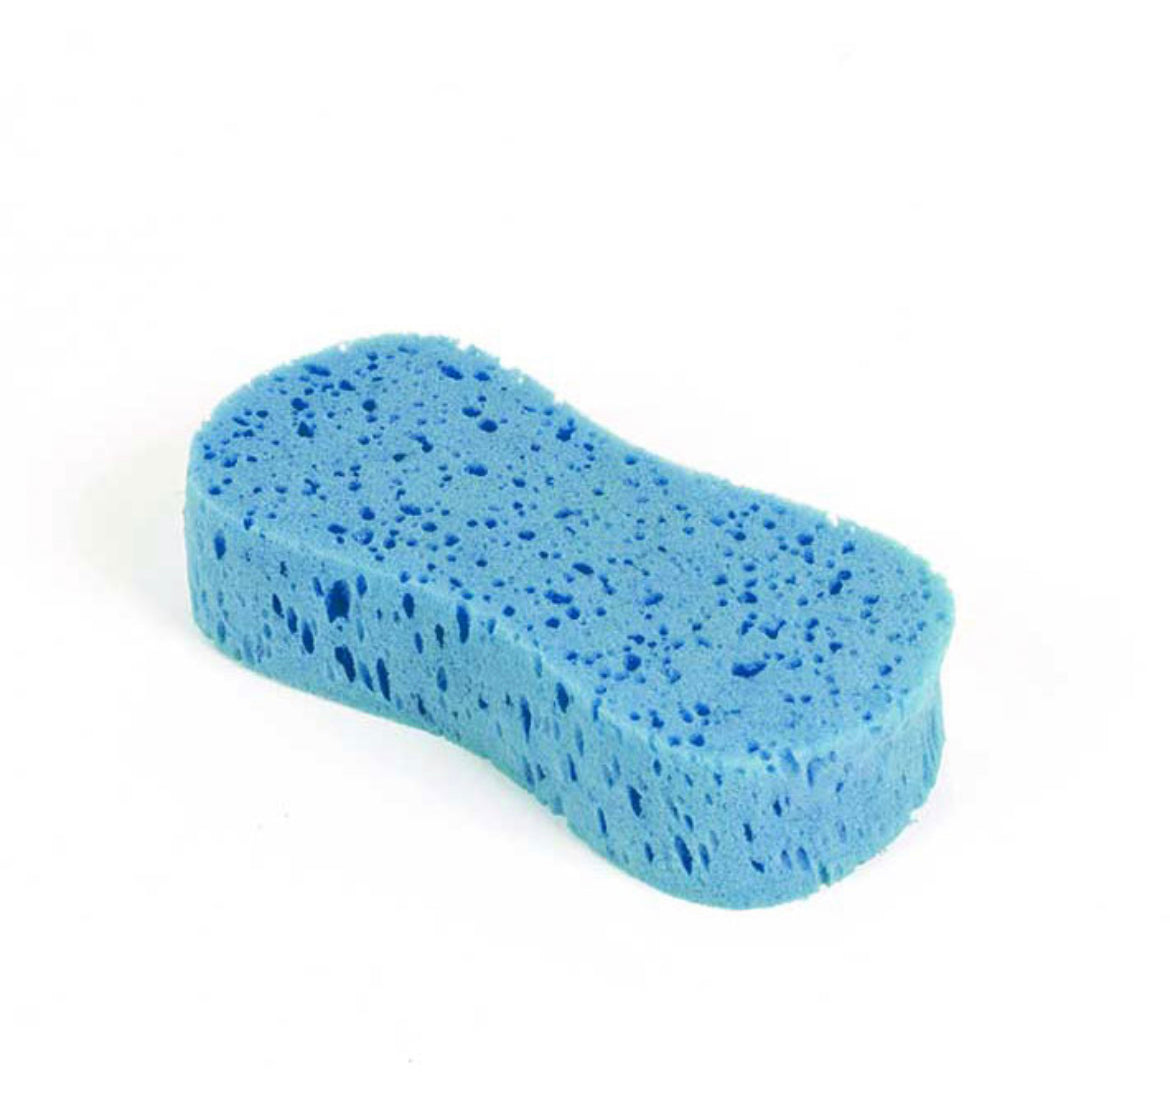 Expanding sponge